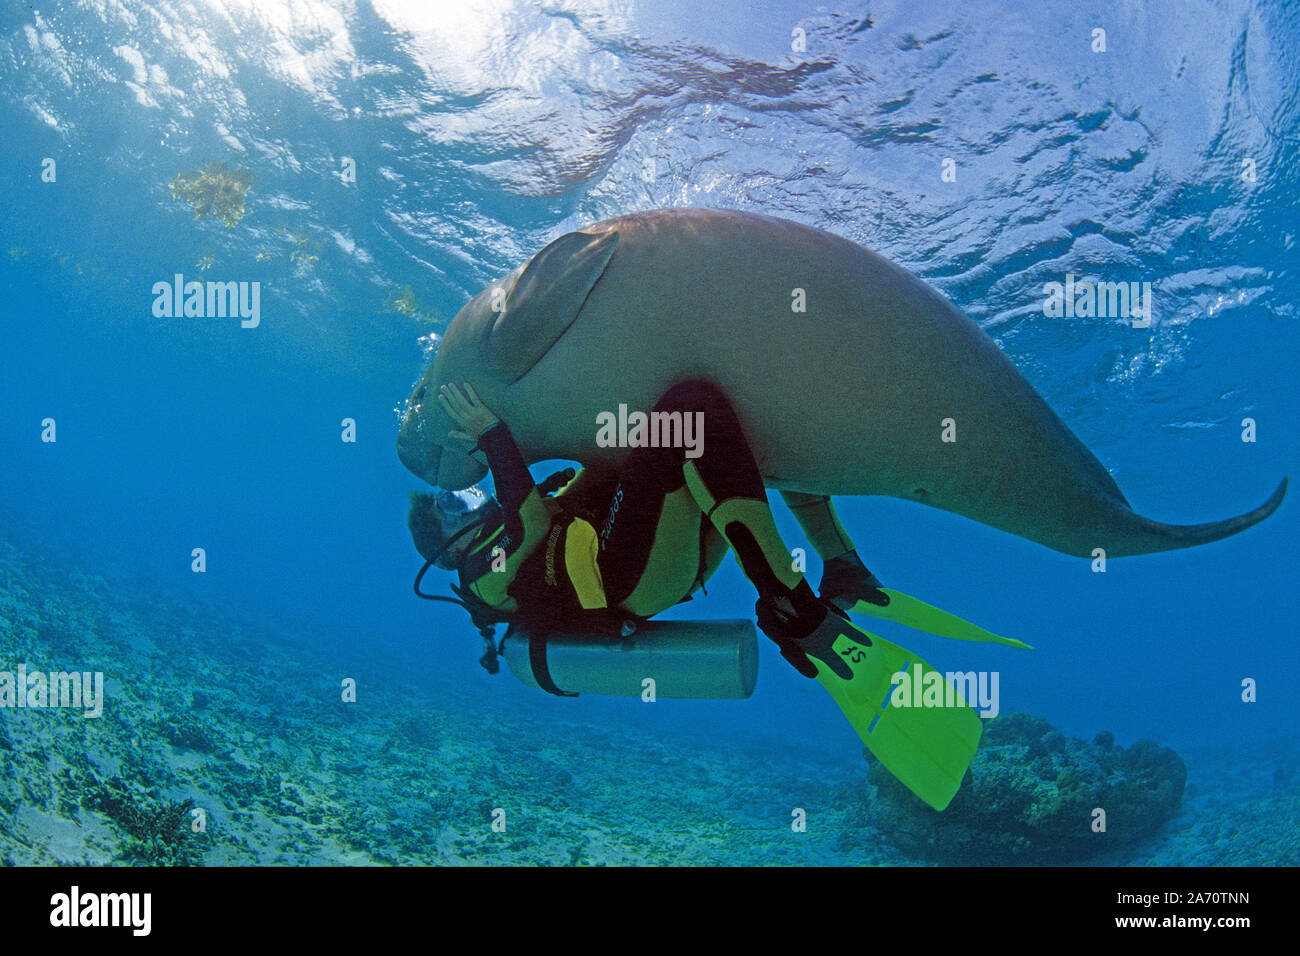 Taucher und verspielter Dugong, Gabelschwanzseekuh (Dugong dugon), Borneo, Malaysia | Scuba Diver mit Seekuh (Dugong dugon), zusammen zu spielen, Borneo Stockfoto